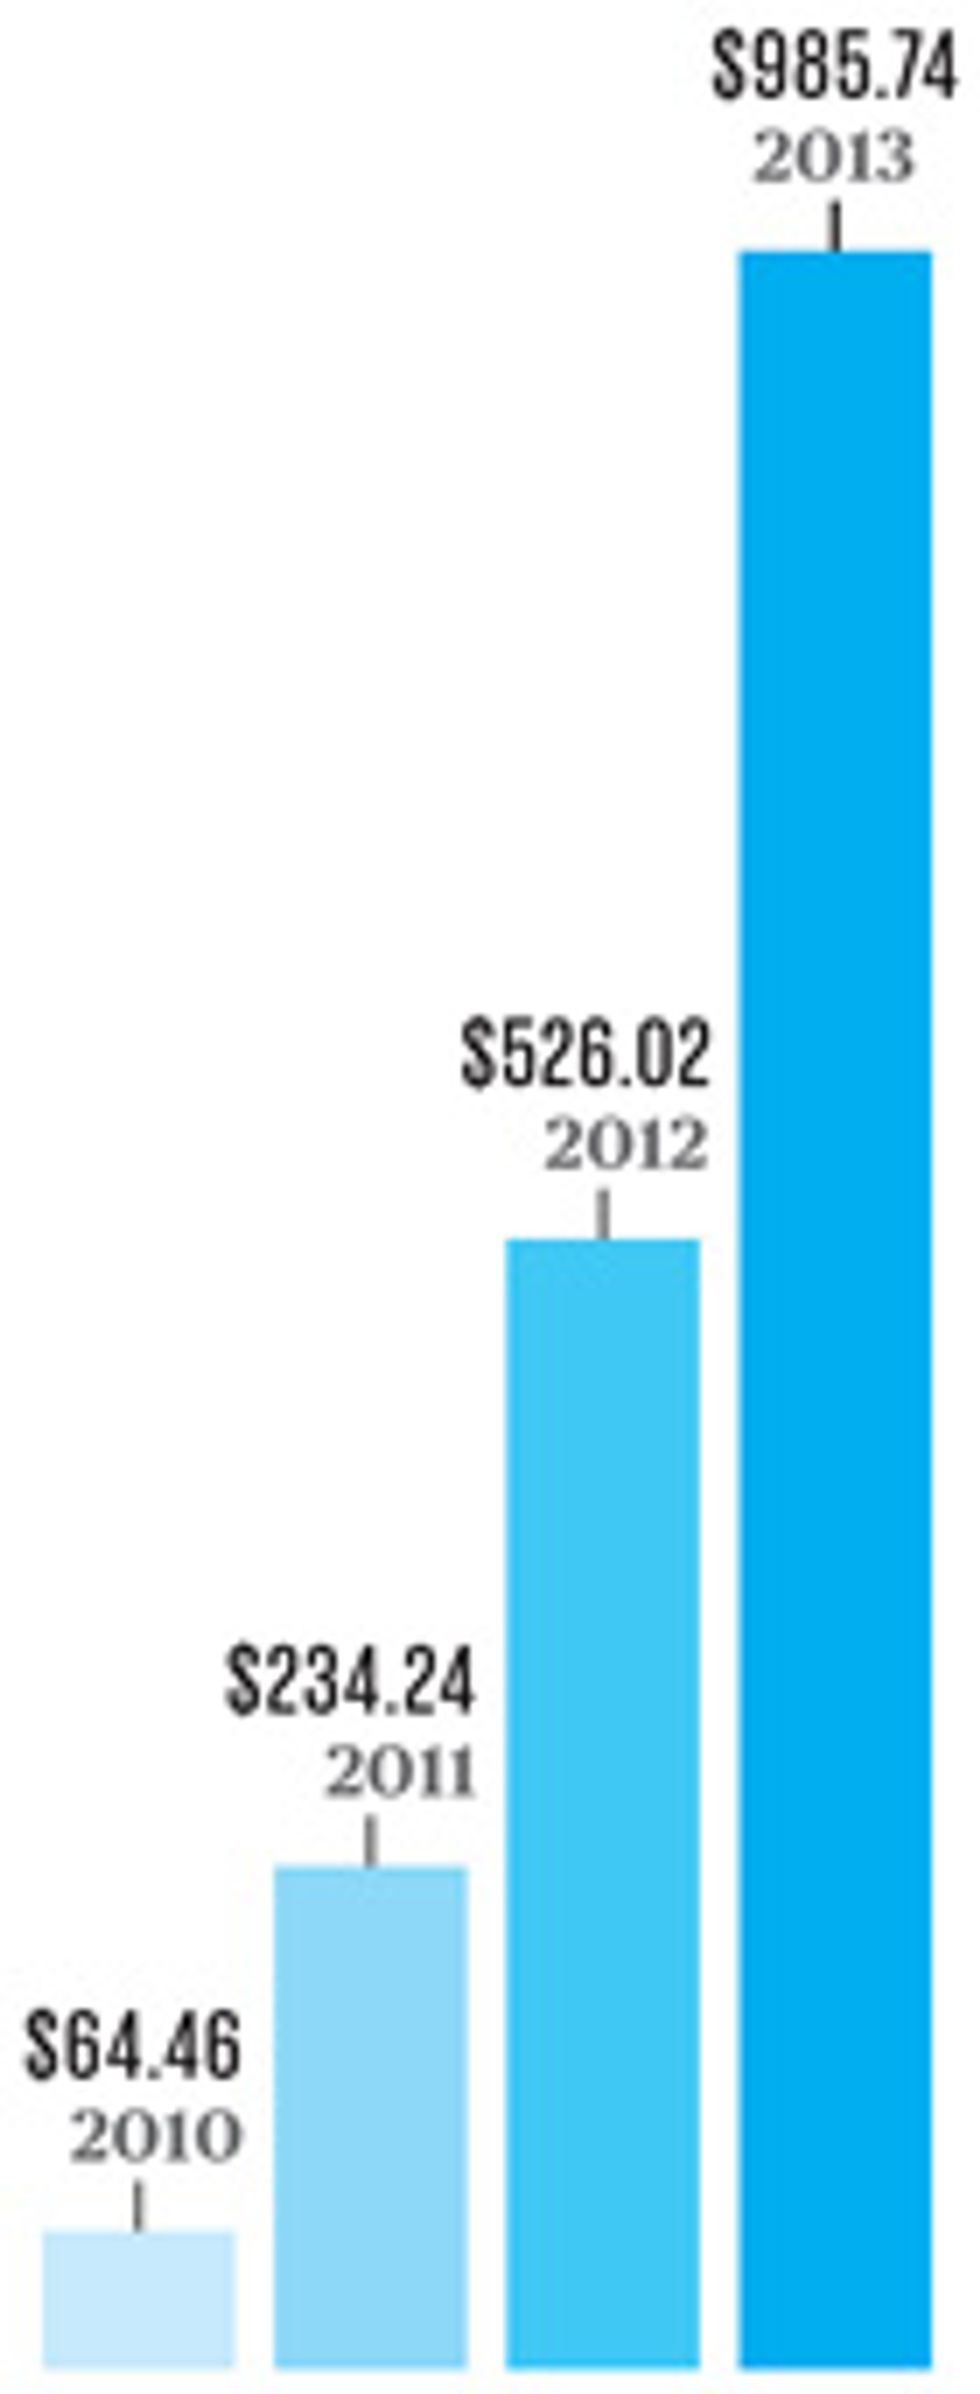 chart goPro annual revenue